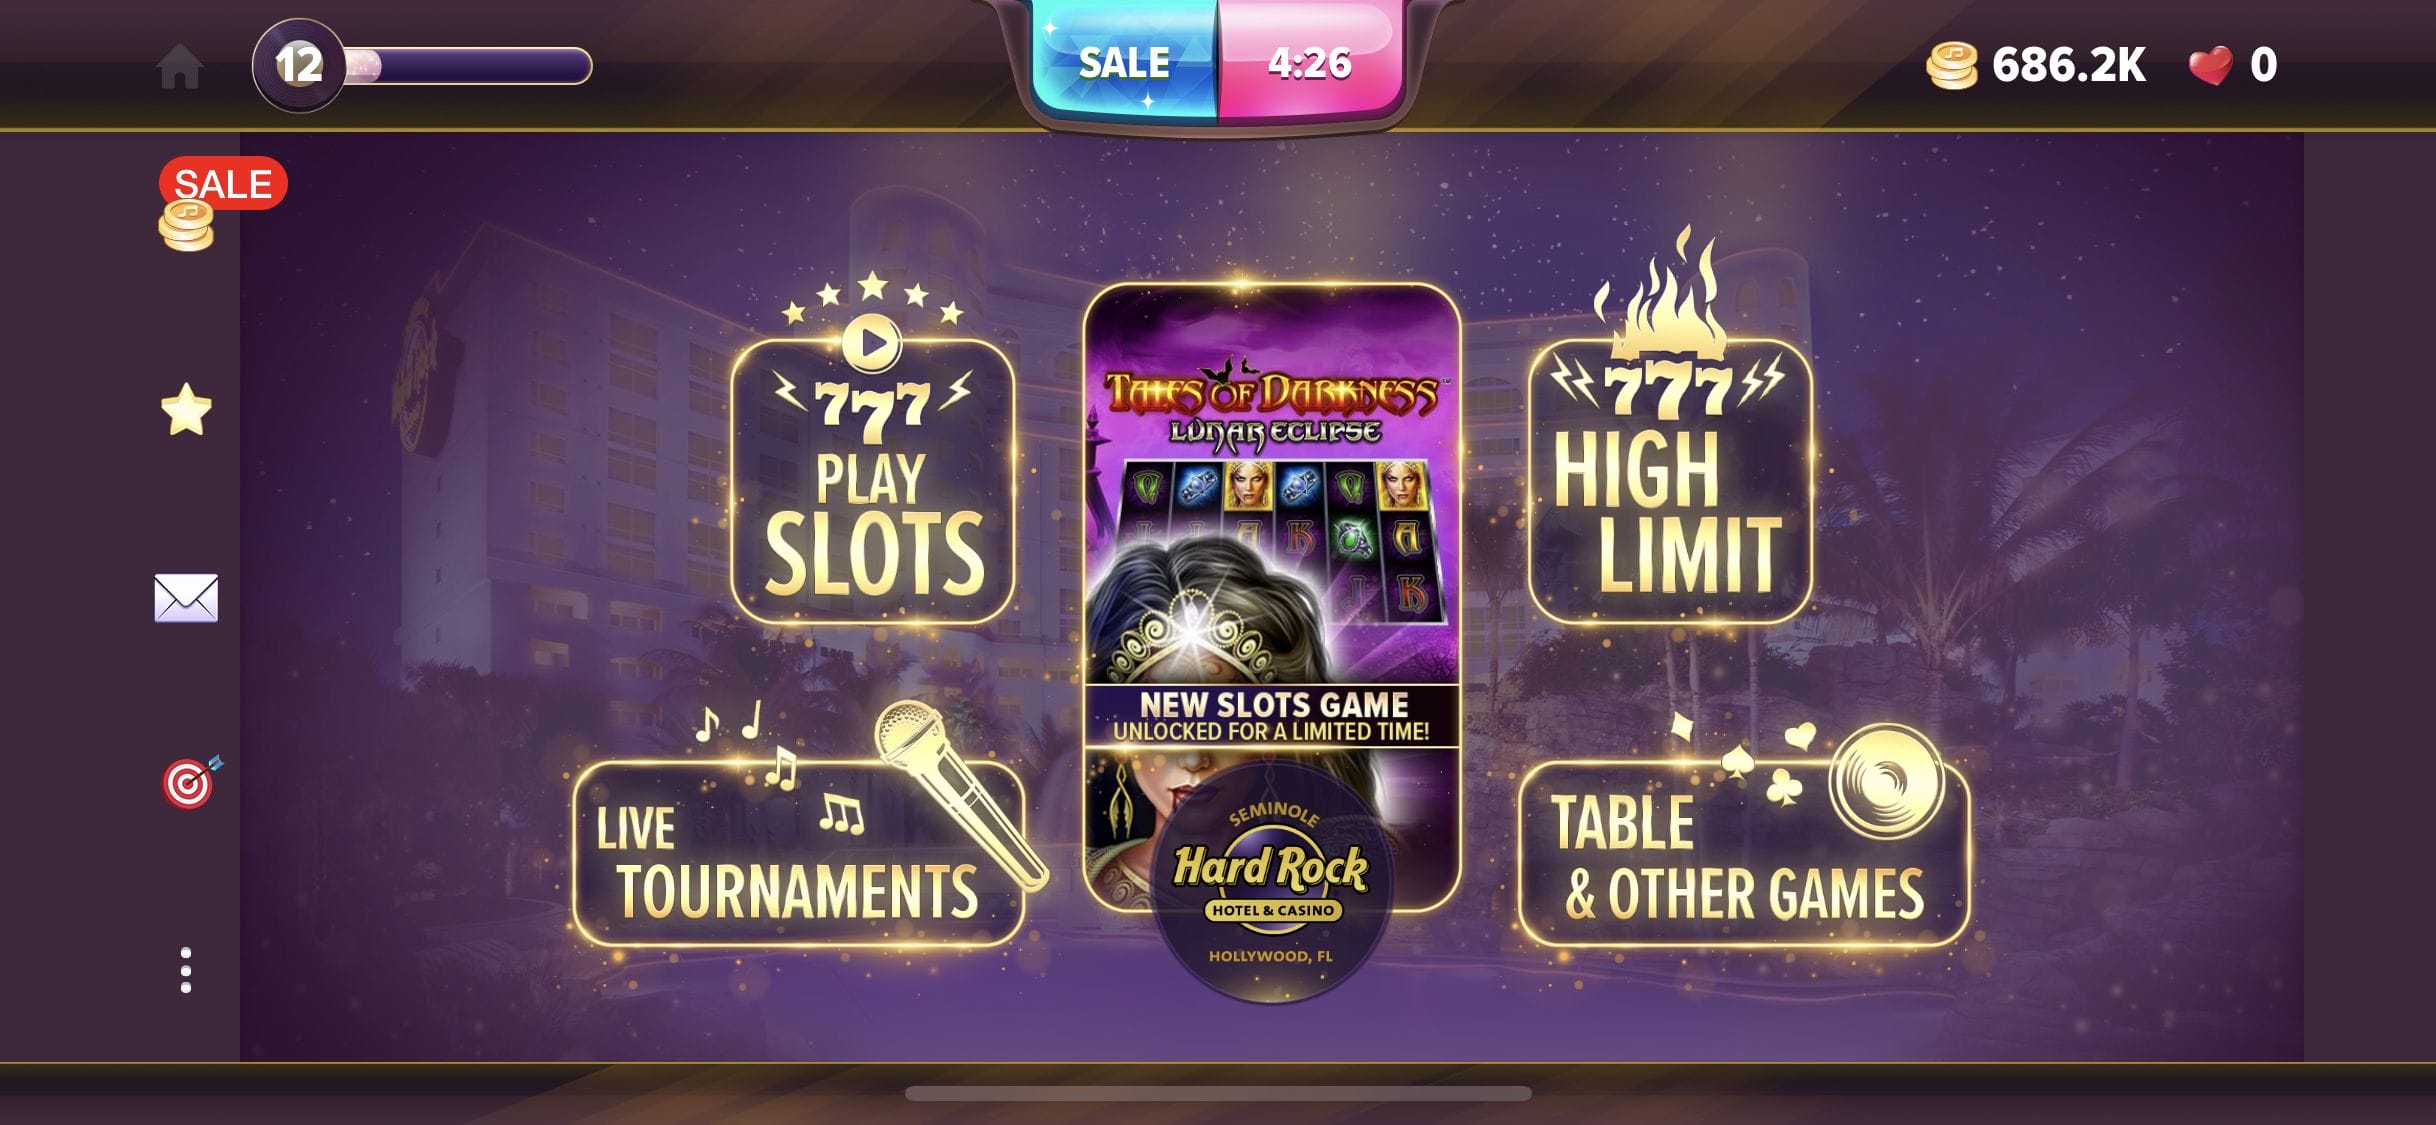 hard rock social casino promo codes 2021